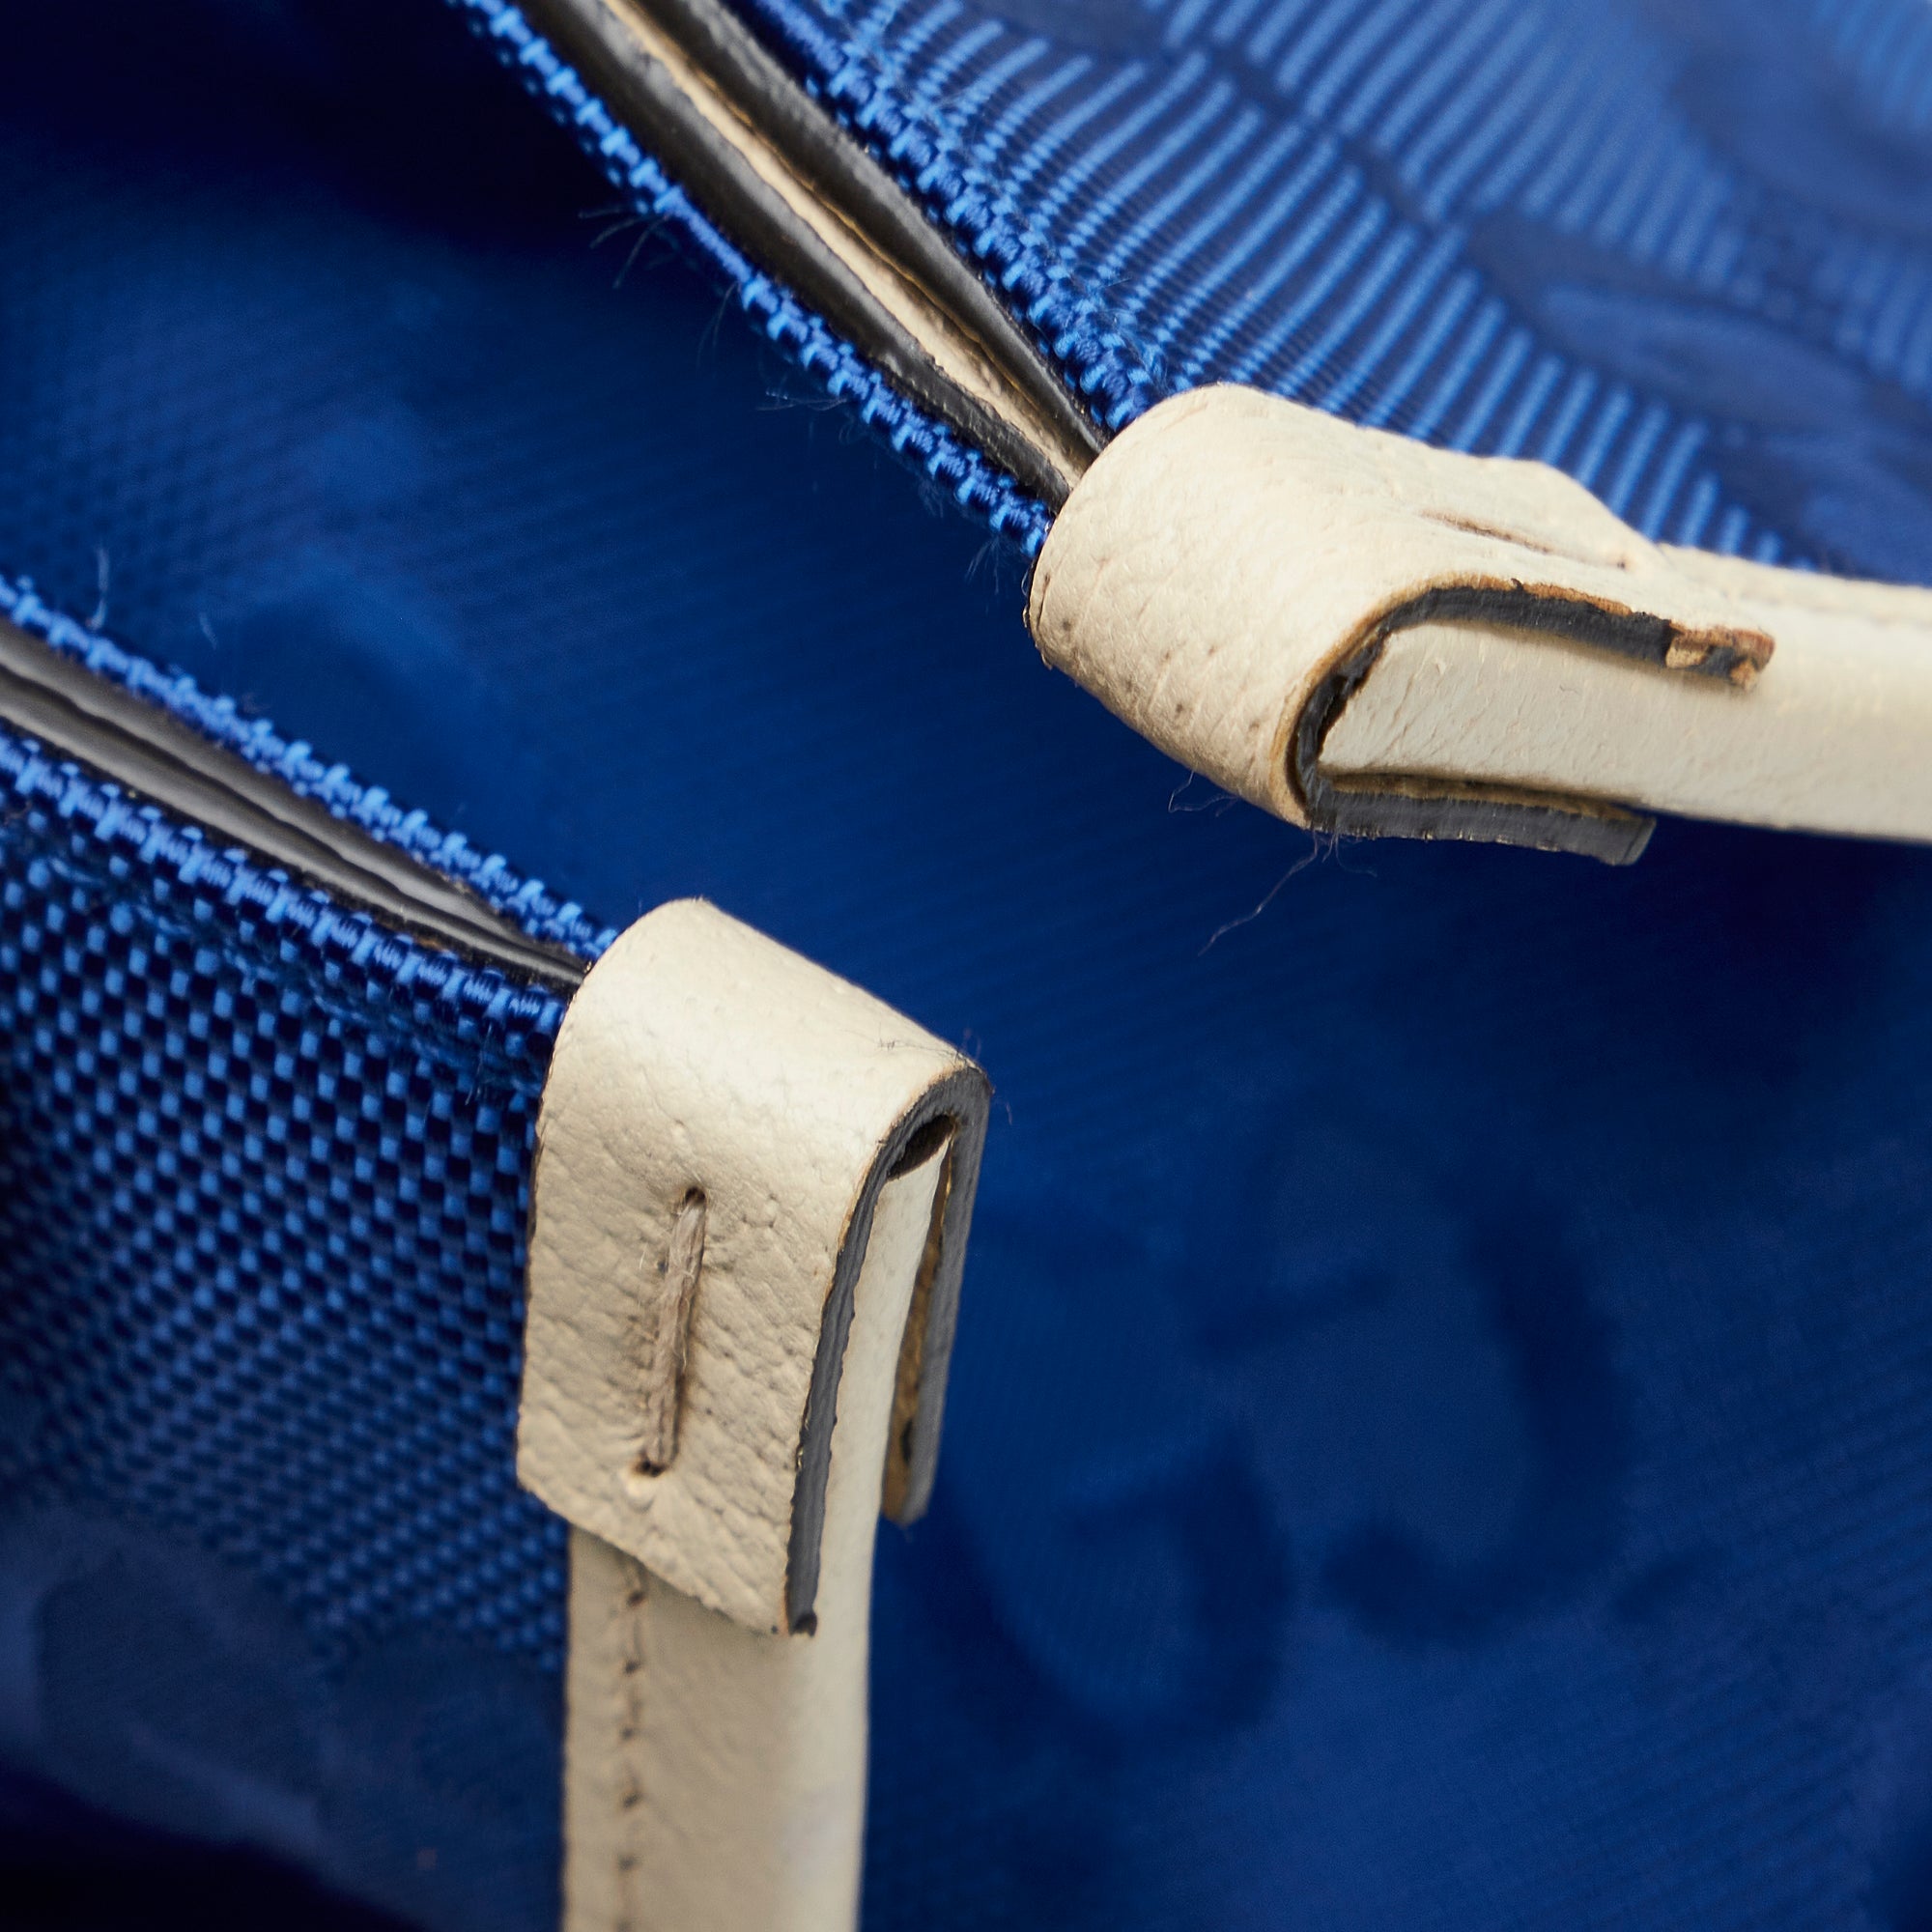 Blue Gucci Large GG Nylon Off the Grid Tote Bag – Designer Revival